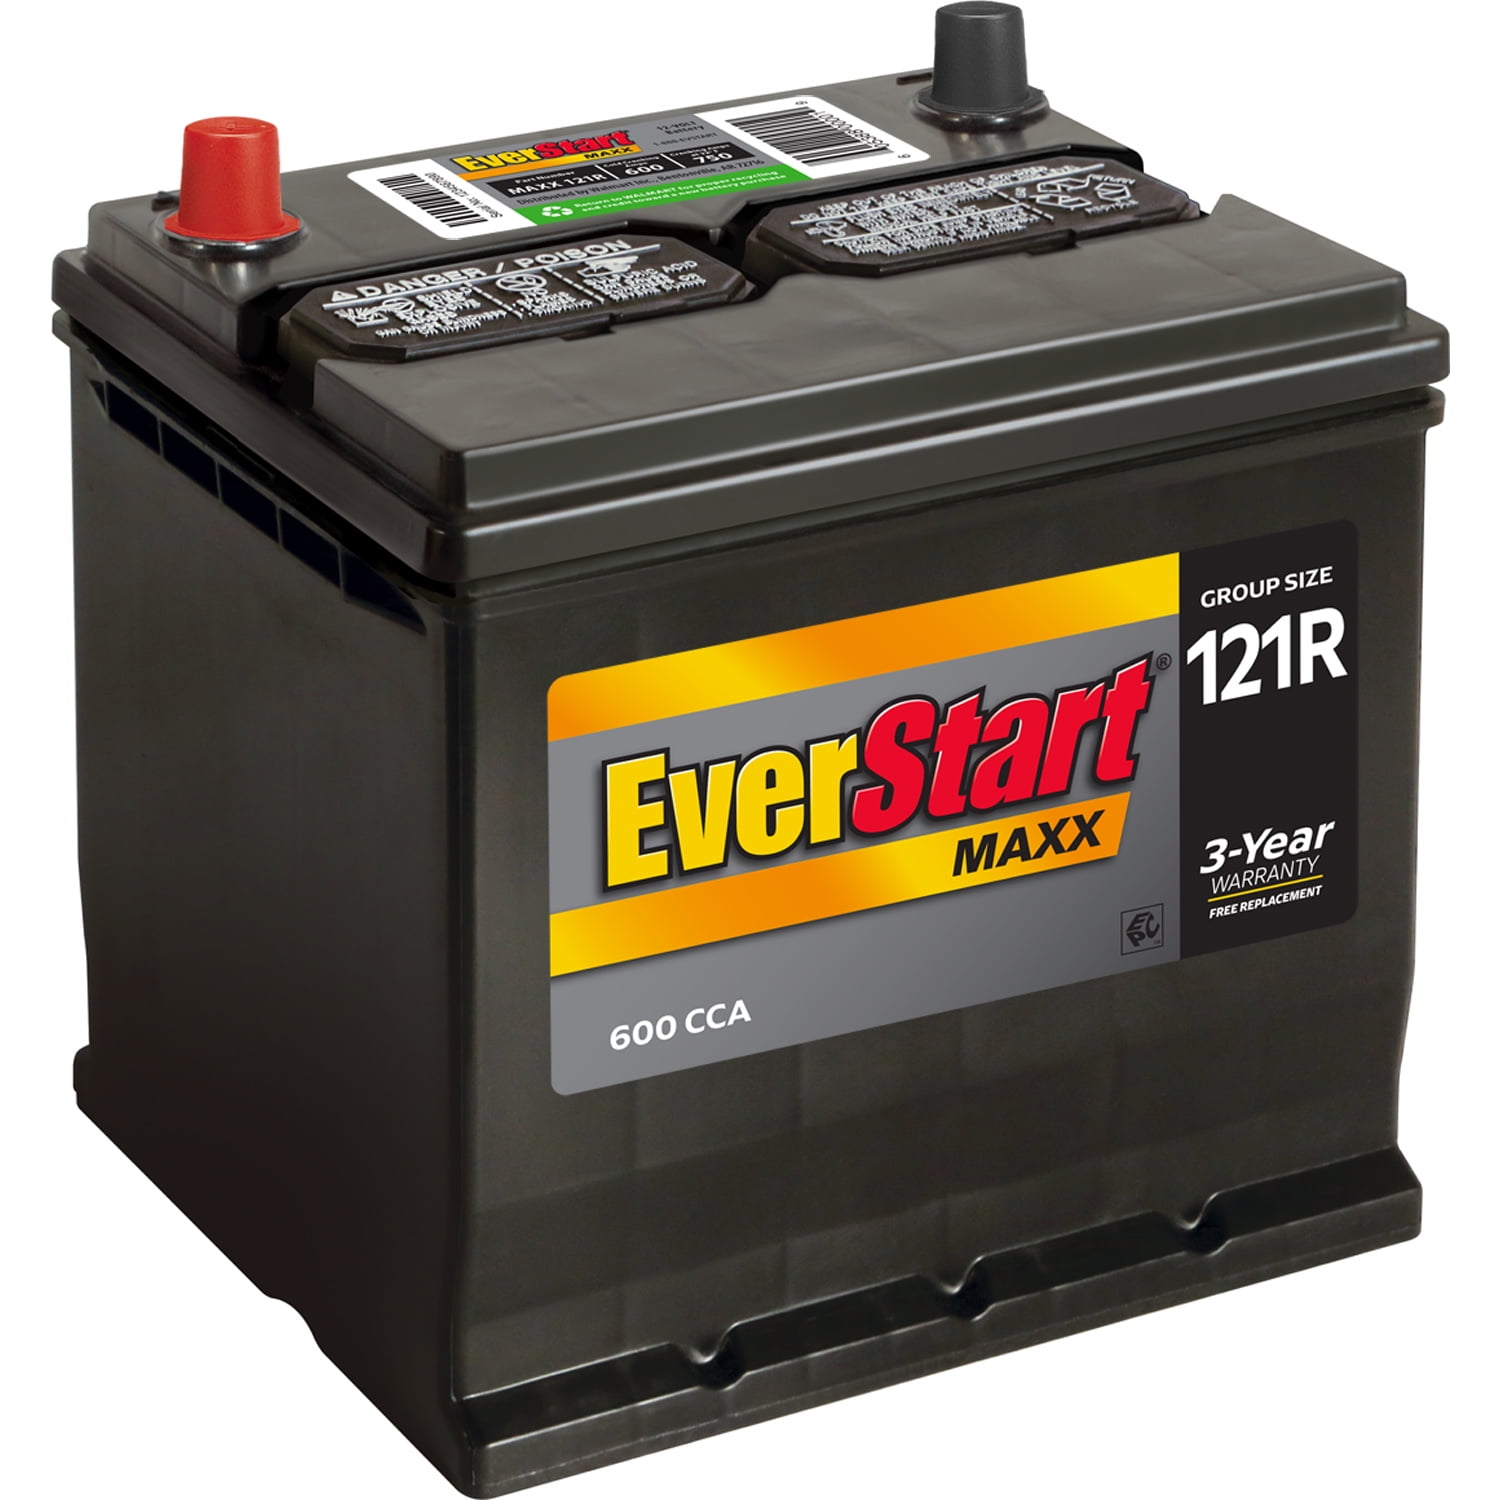 EverStart Maxx Lead Acid Automotive Battery, Group Size 121R (12 Volt/600  CCA) 